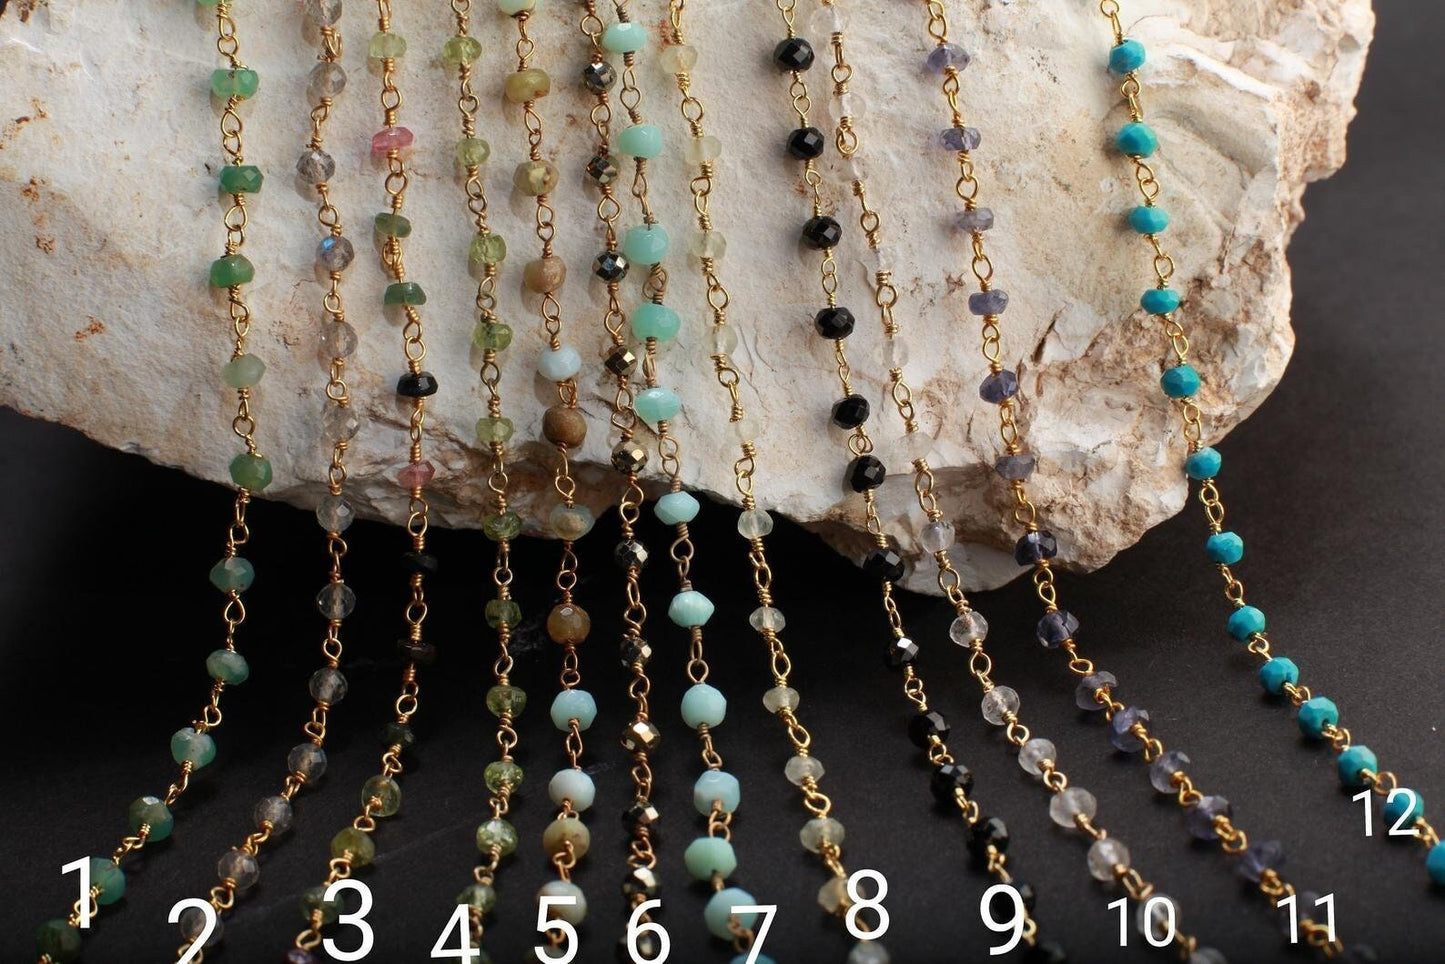 Chrysoprase,Labradorite,Tourmaline,Peridot,Opal,Pyrite,Amazonite,Aquamarine,Spinel,Moonstone ,Iolite, TQ Gold Rosary Finished Chain Necklace